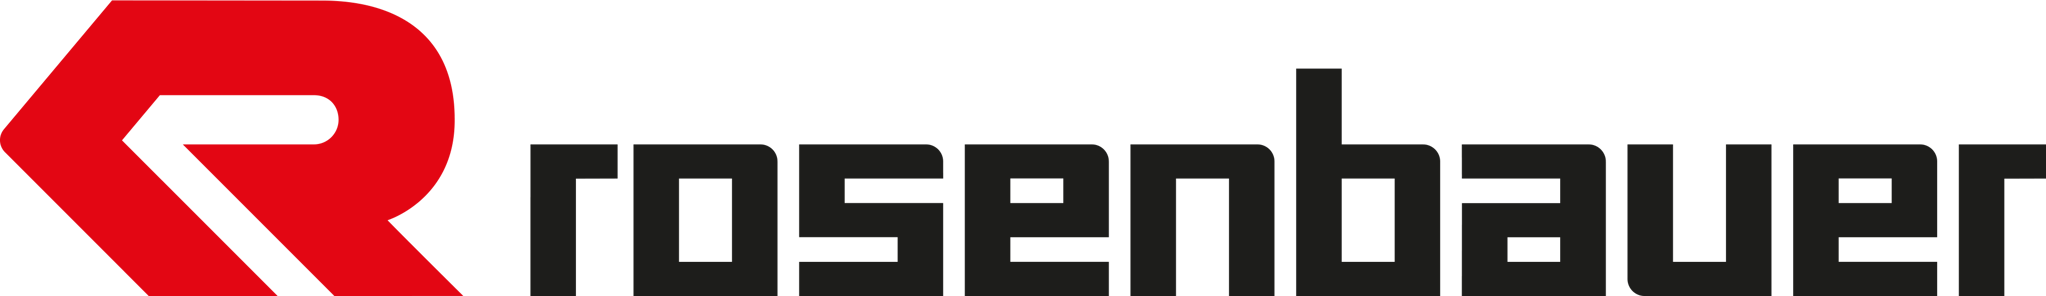 Rosenbauer-Logo